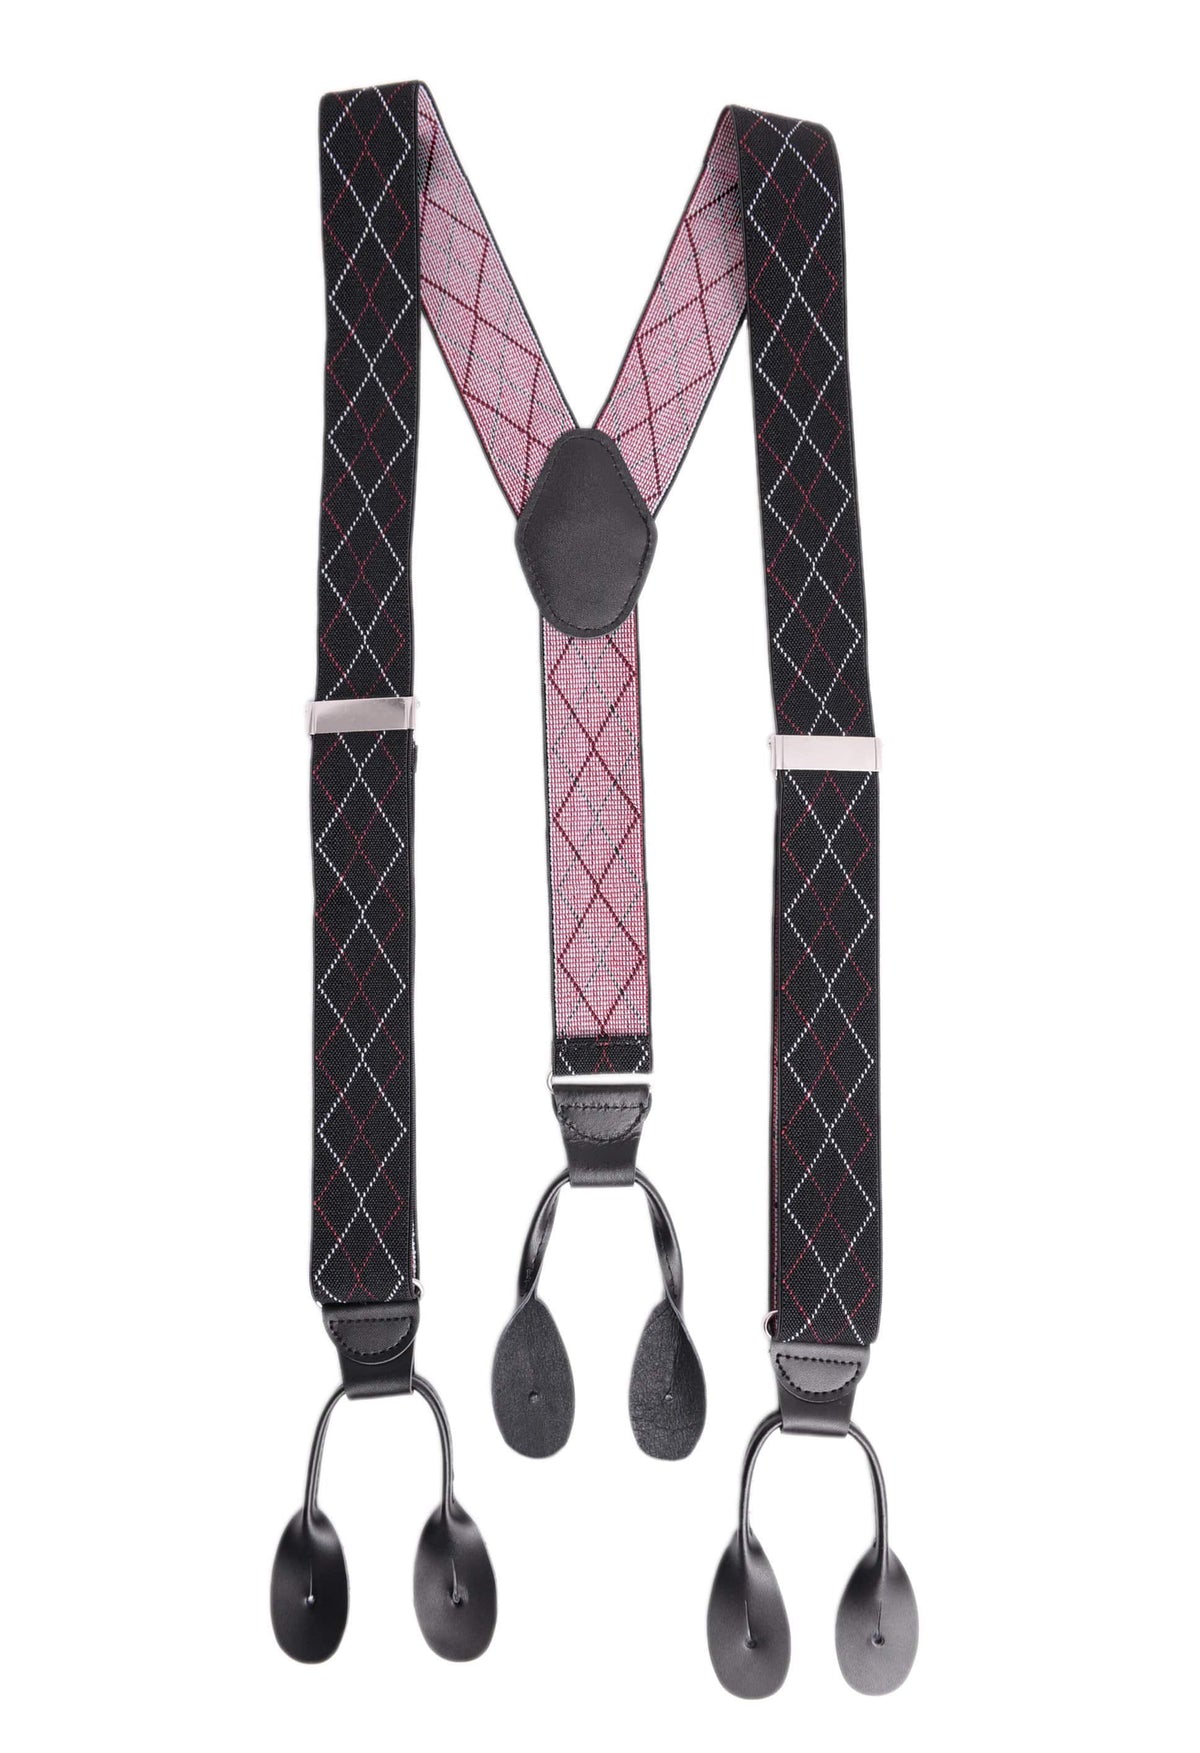 Ariston Suspenders Black Diamond / Regular Mens Button Black Leather Braces Adjustable Y Back Suspenders Xlong Available